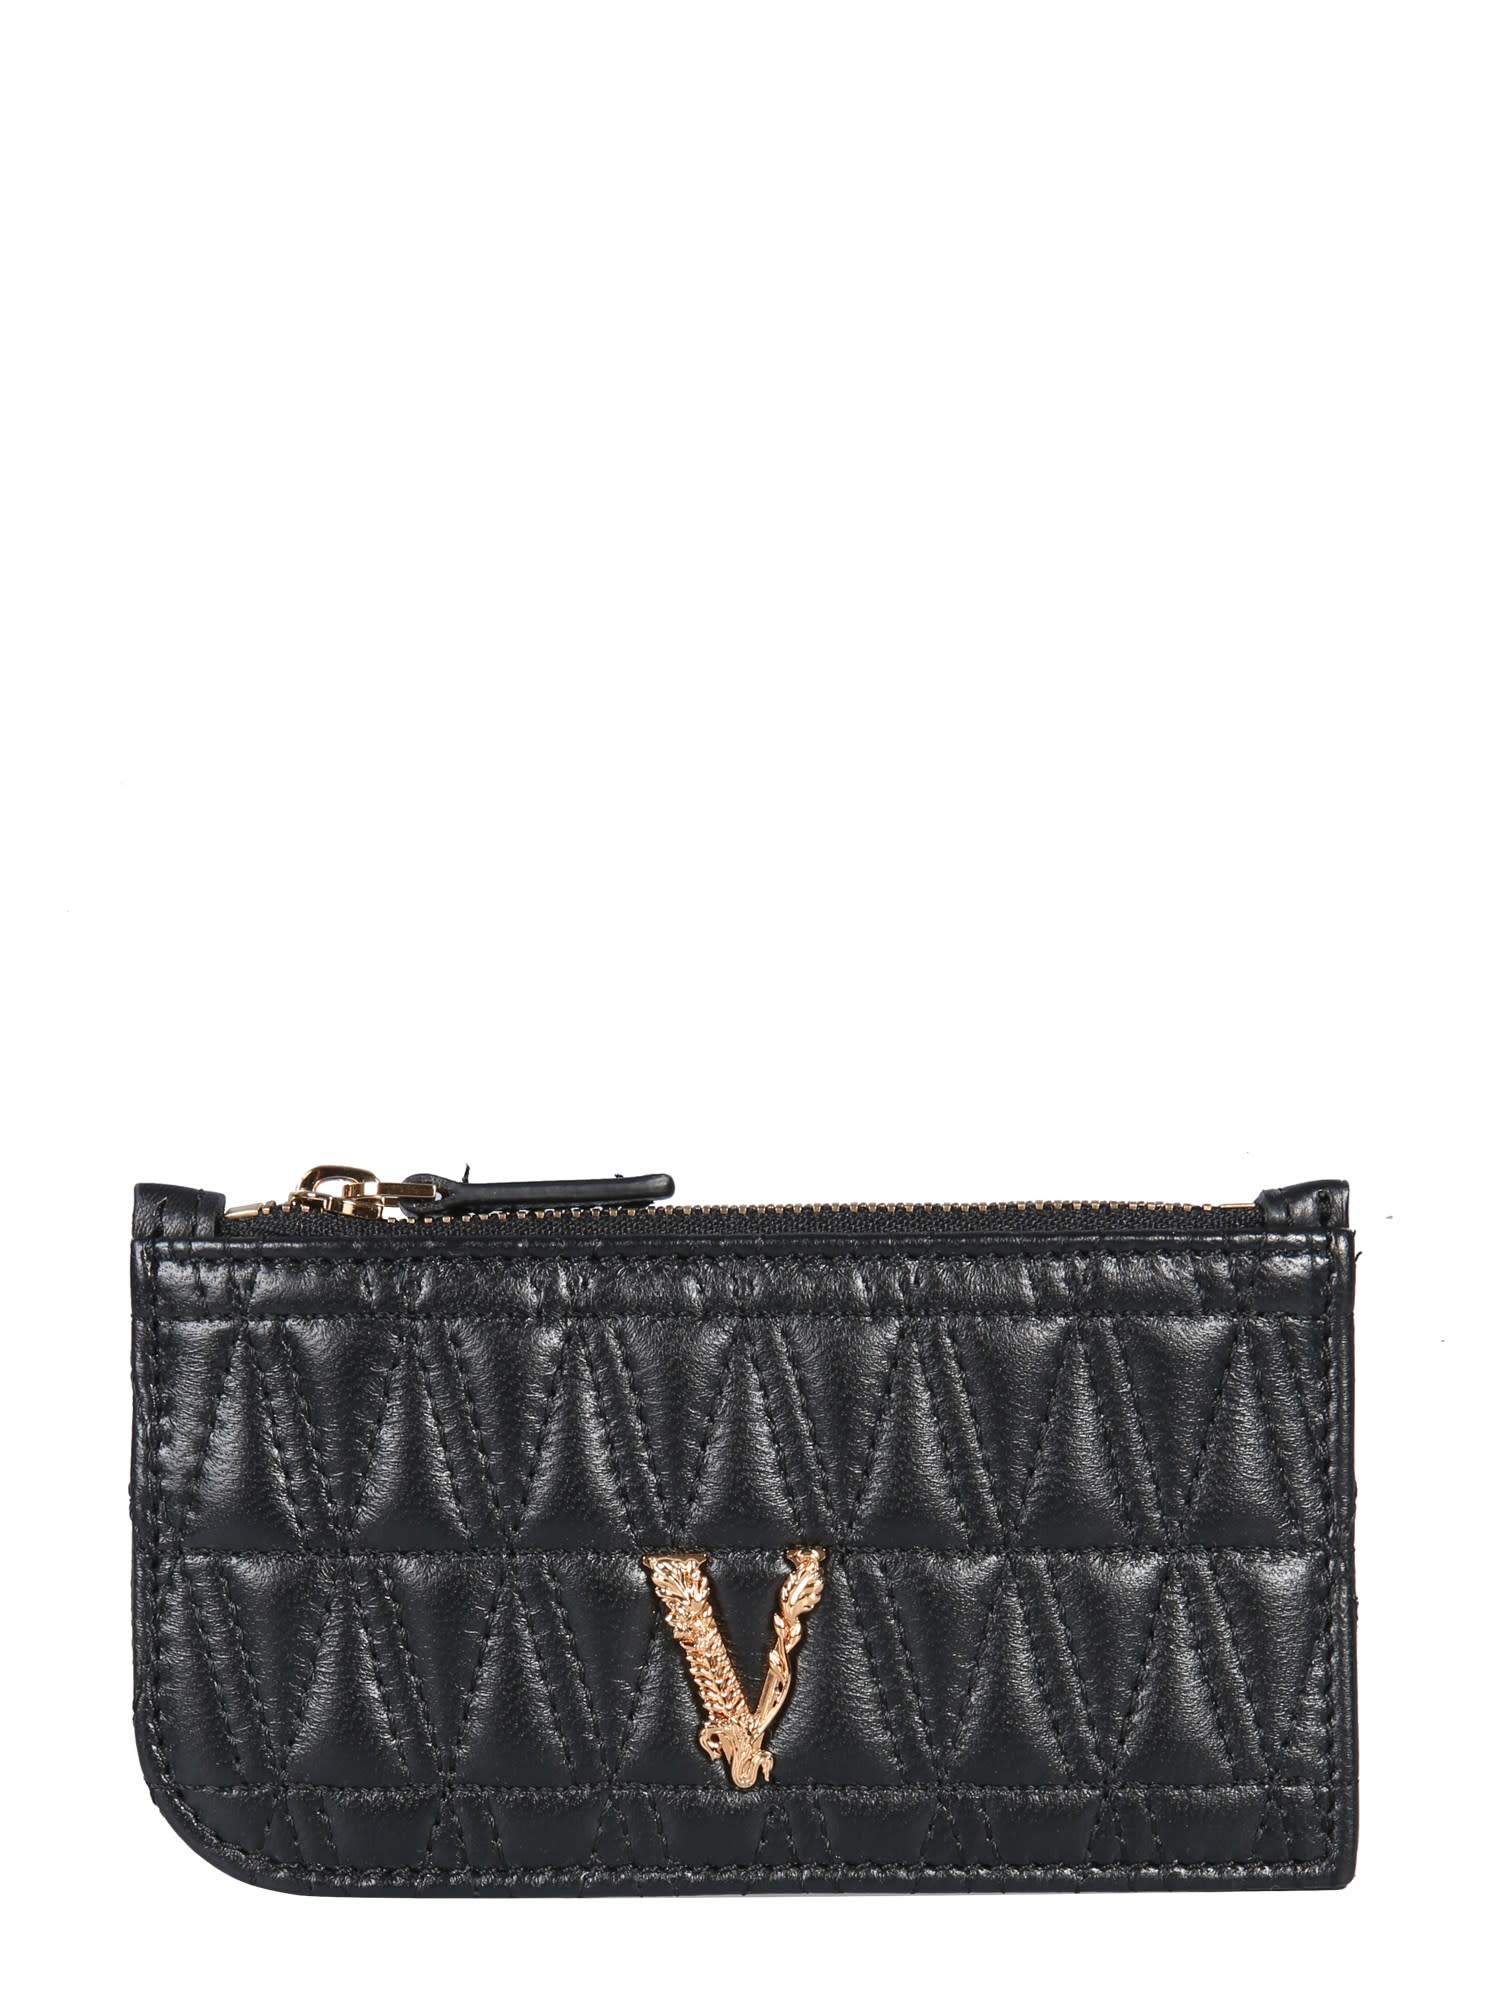 Versace Virtus Card Holder